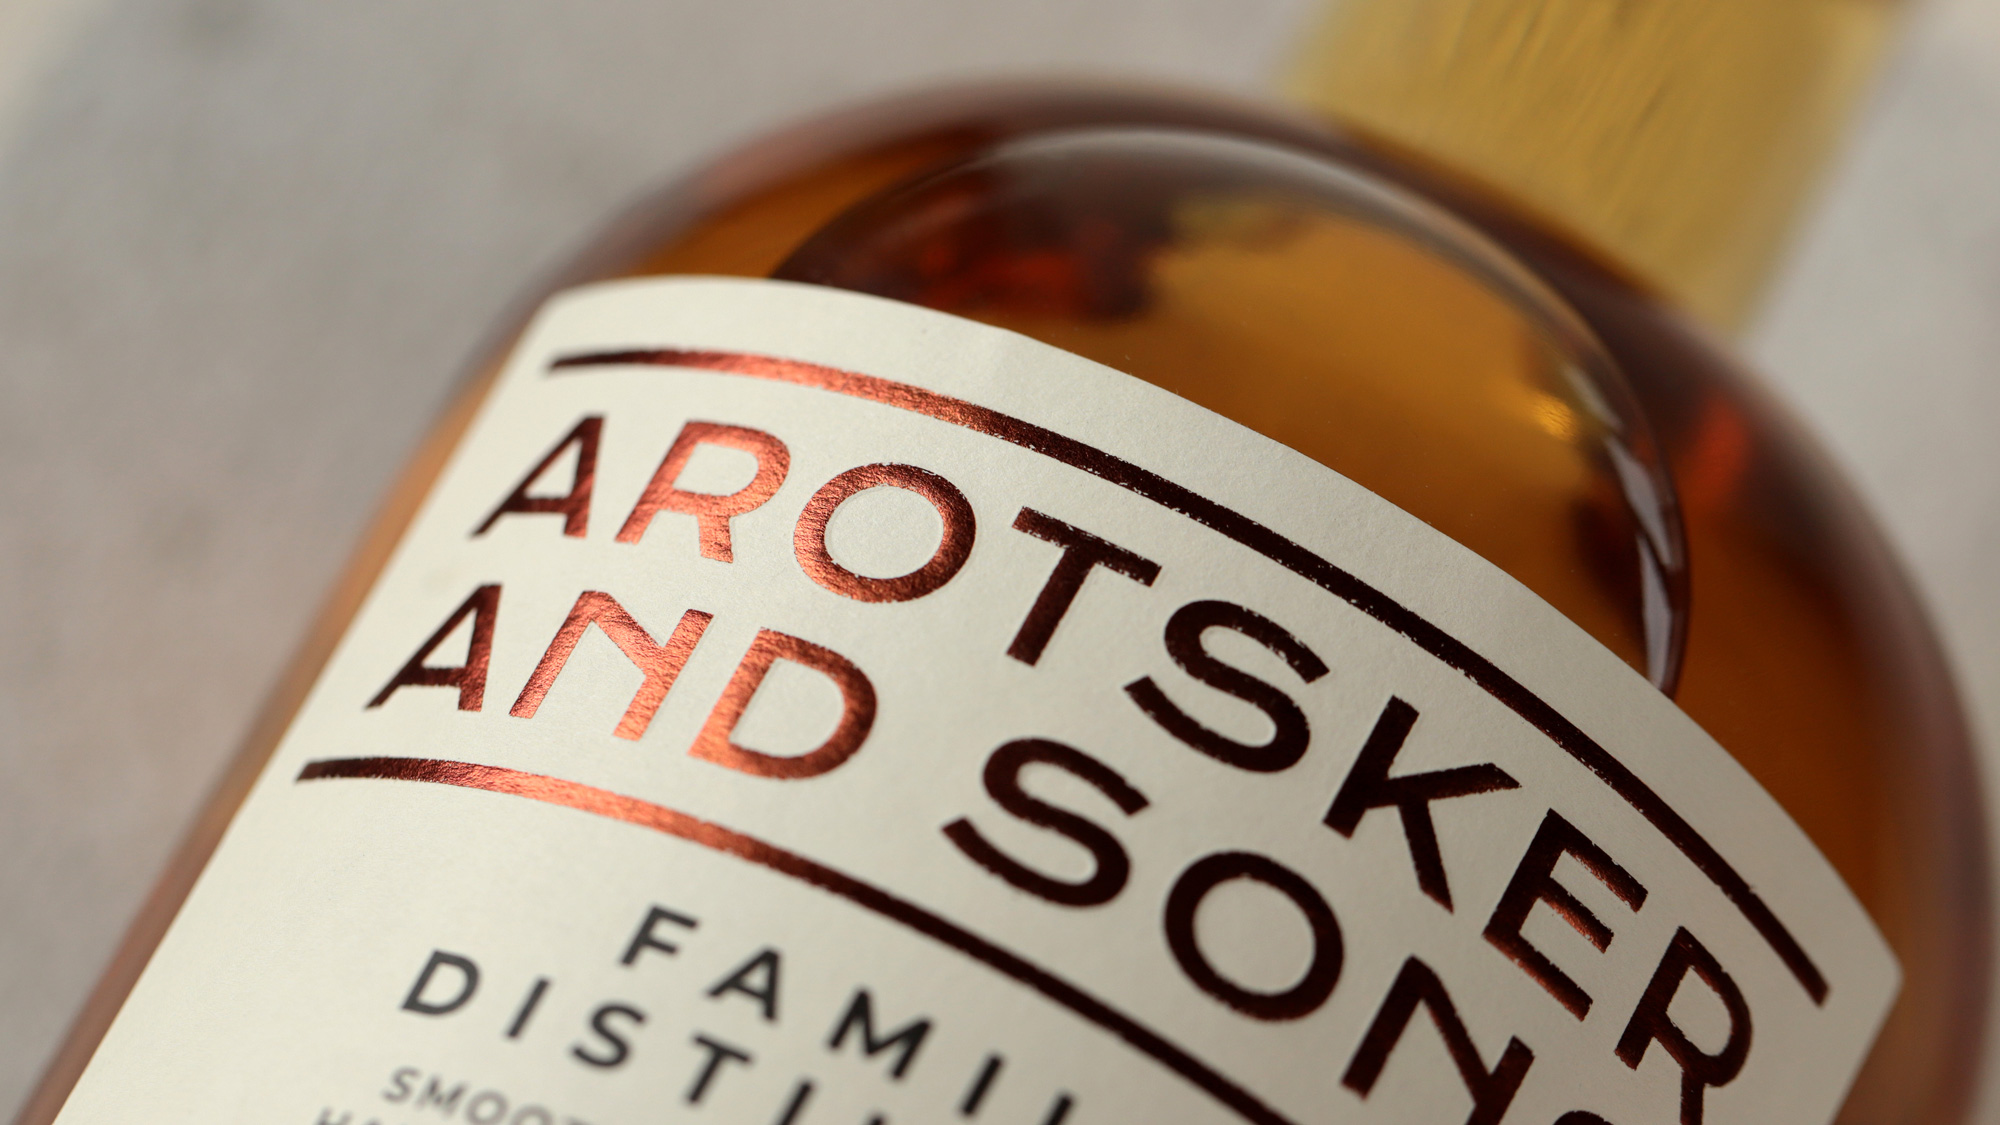 The Arotsker & Sons Distillery Spirits Designed by Dozen Agency